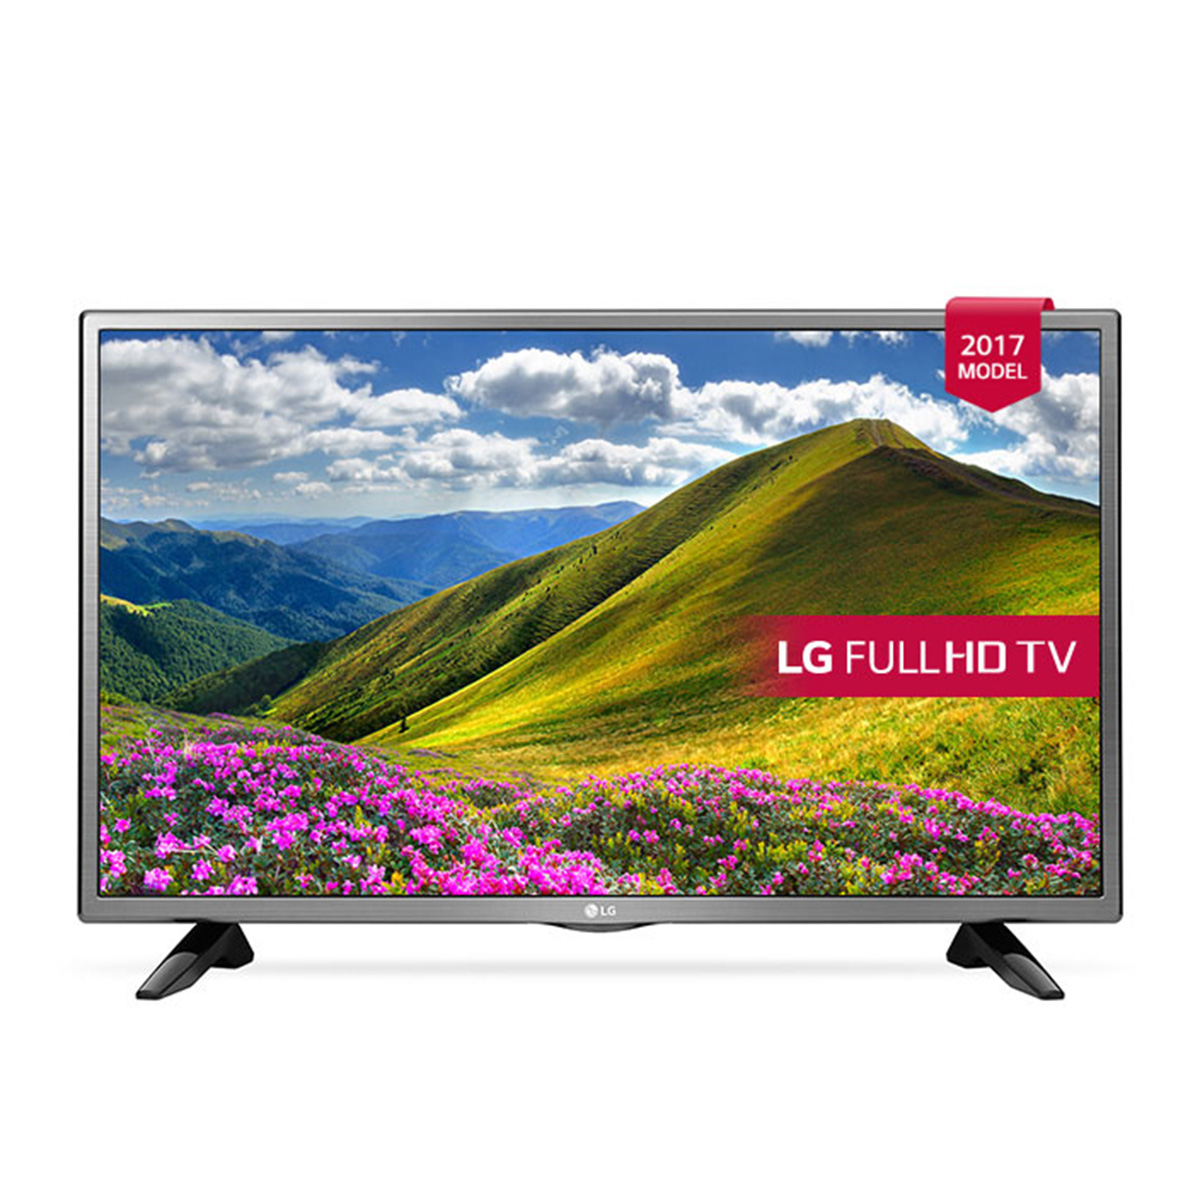 Куплю телевизор 43 дюйма дешево. Телевизор LG 43lj519v 43" (2017). Телевизор LG 32lj519u 32" (2017). Телевизор LG 32lj600u 32" (2017). Телевизор LG 32lm550b.